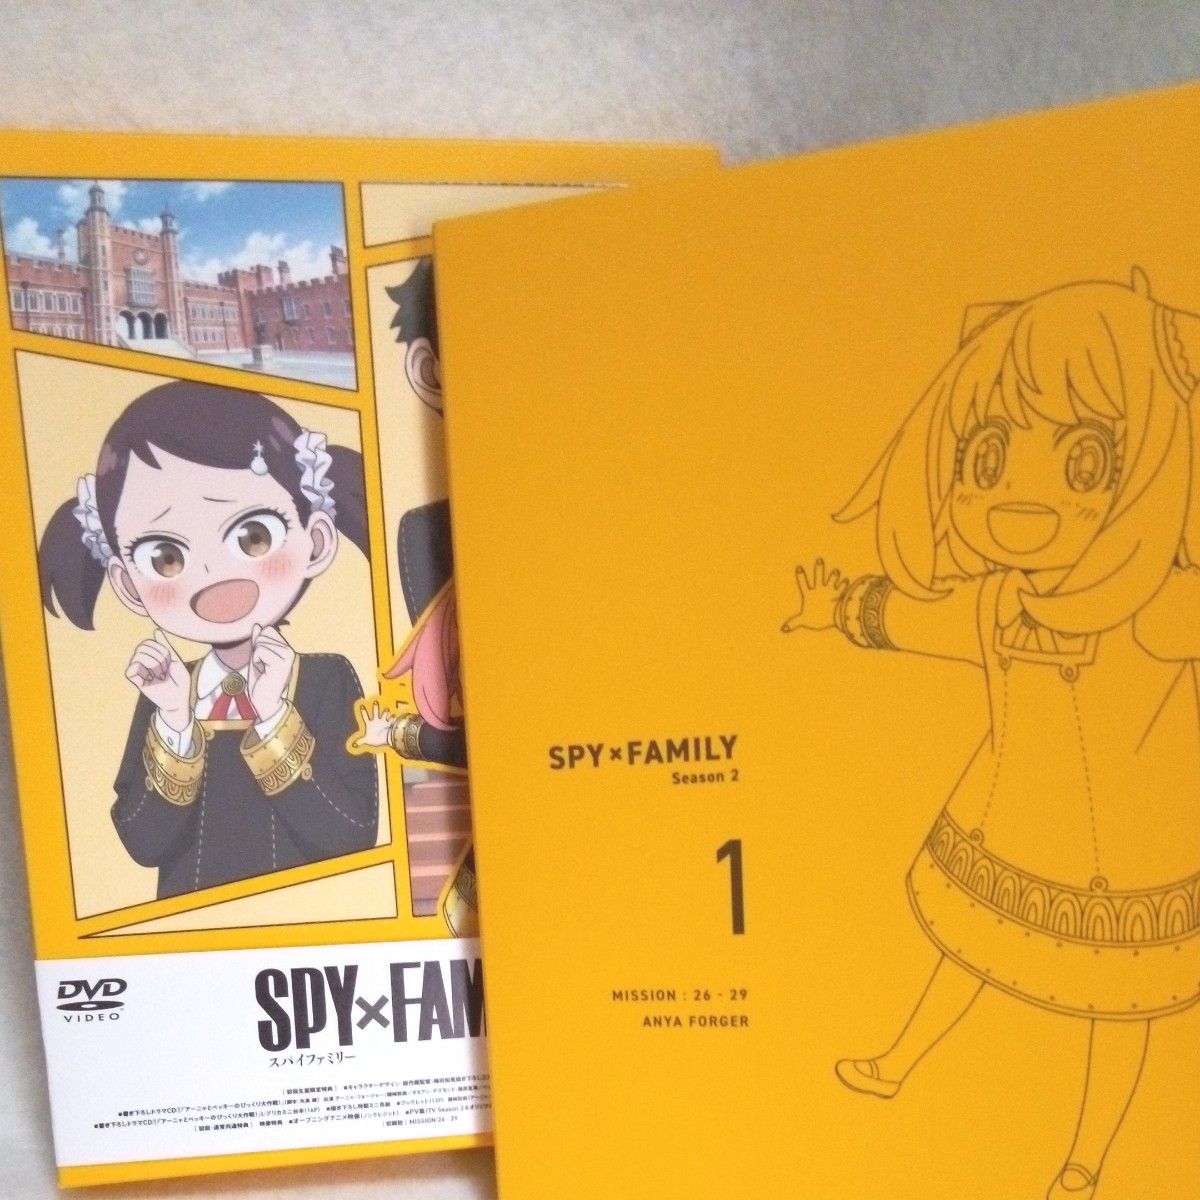 SPY×FAMILY Season 2 Vol.1 初回生産限定版 DVD 　イベントシリアルナンバー無し